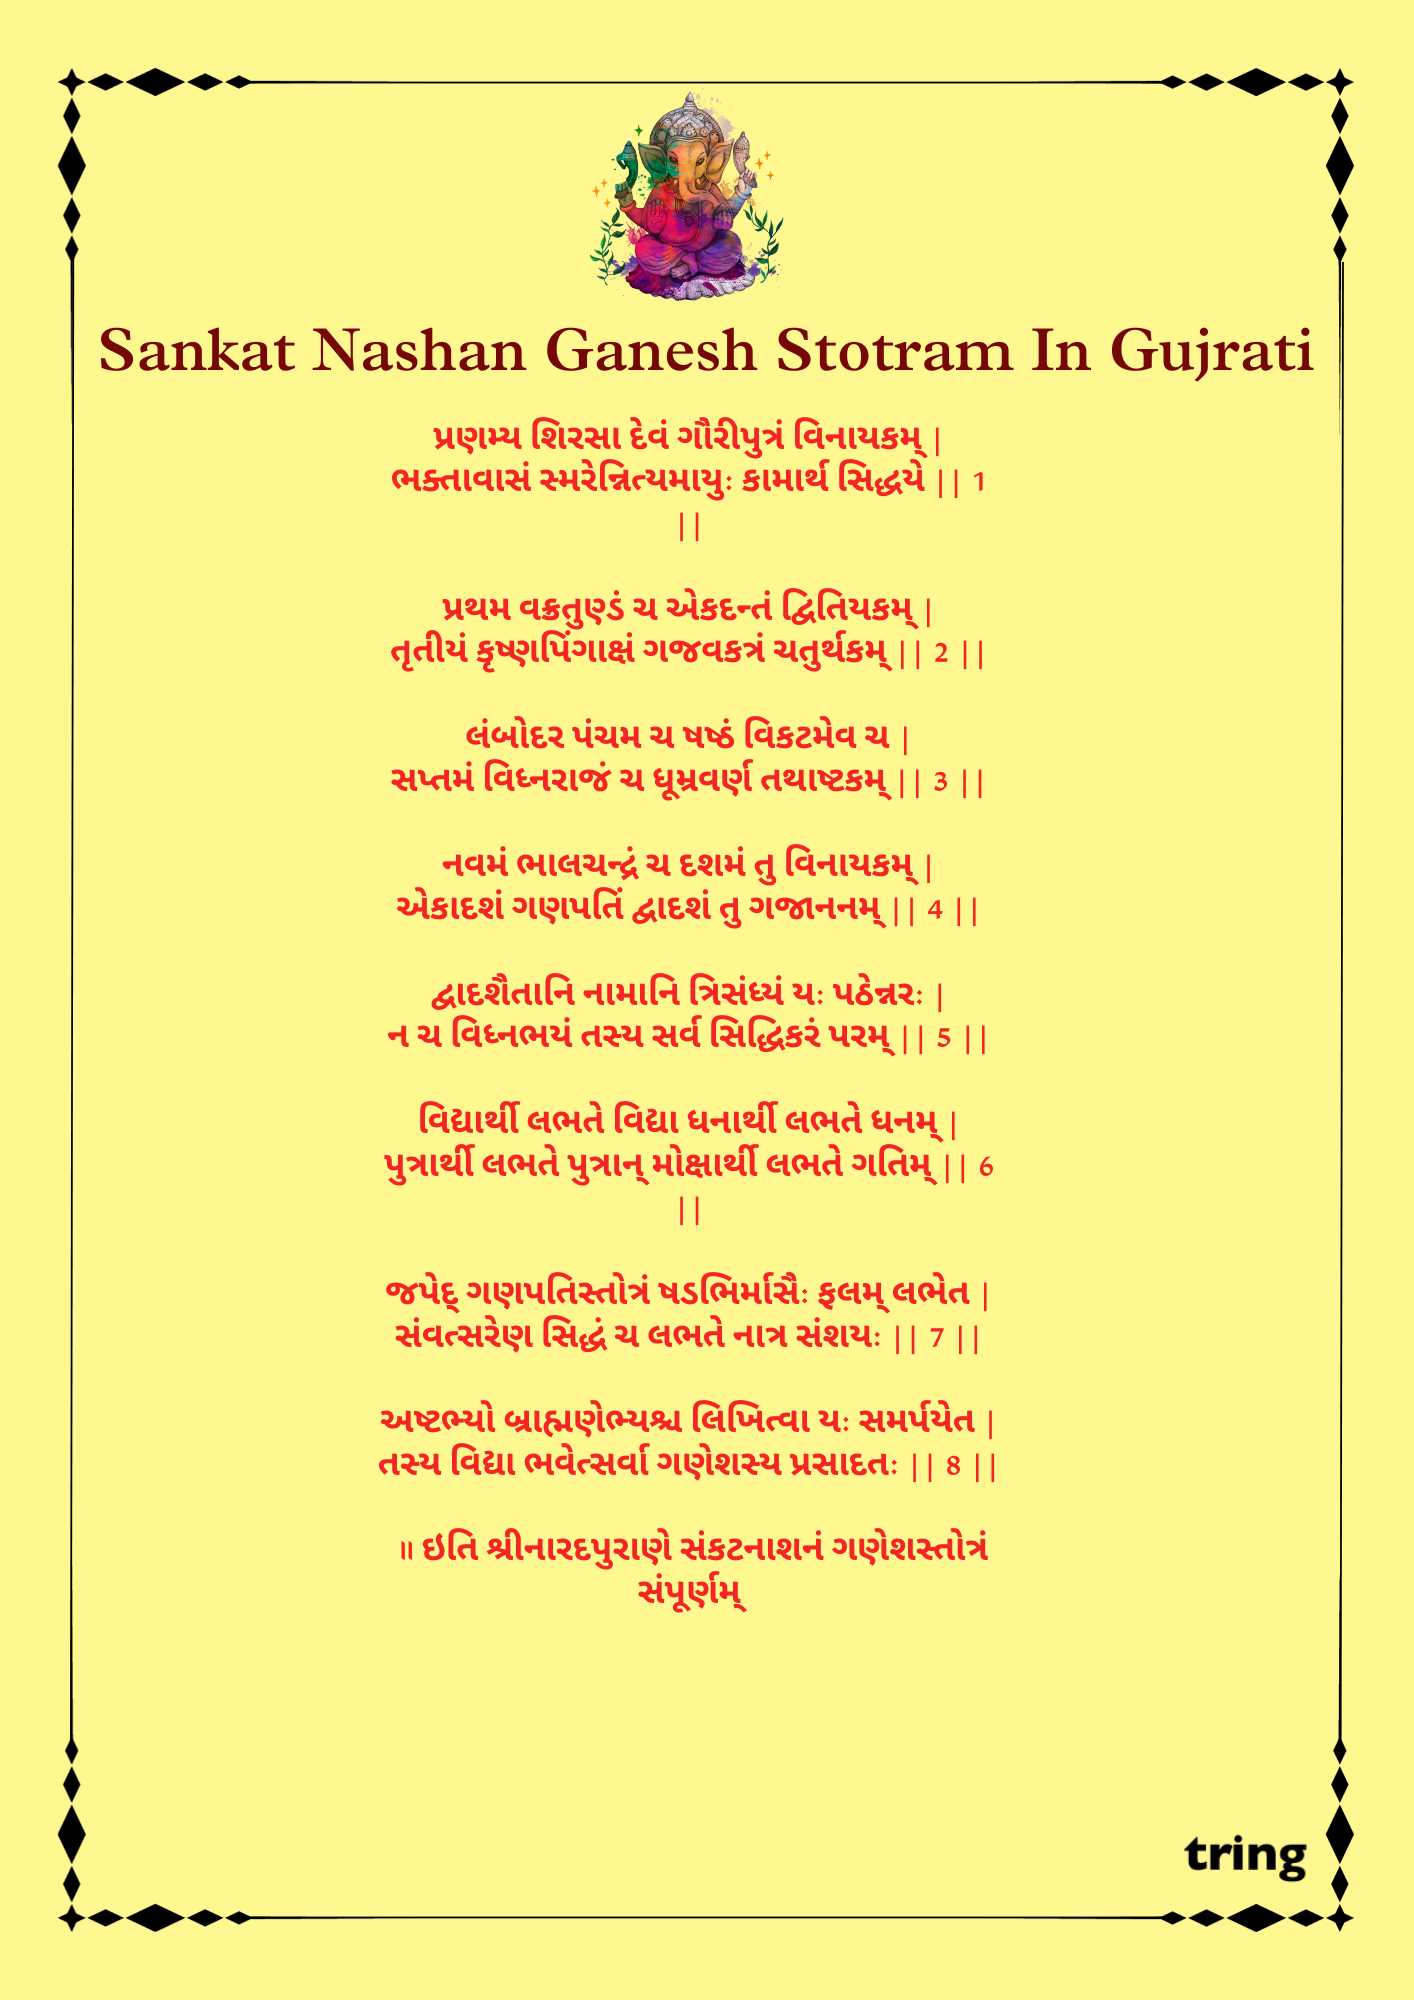 Sankat Nashan Ganesh Stotram Images (3)